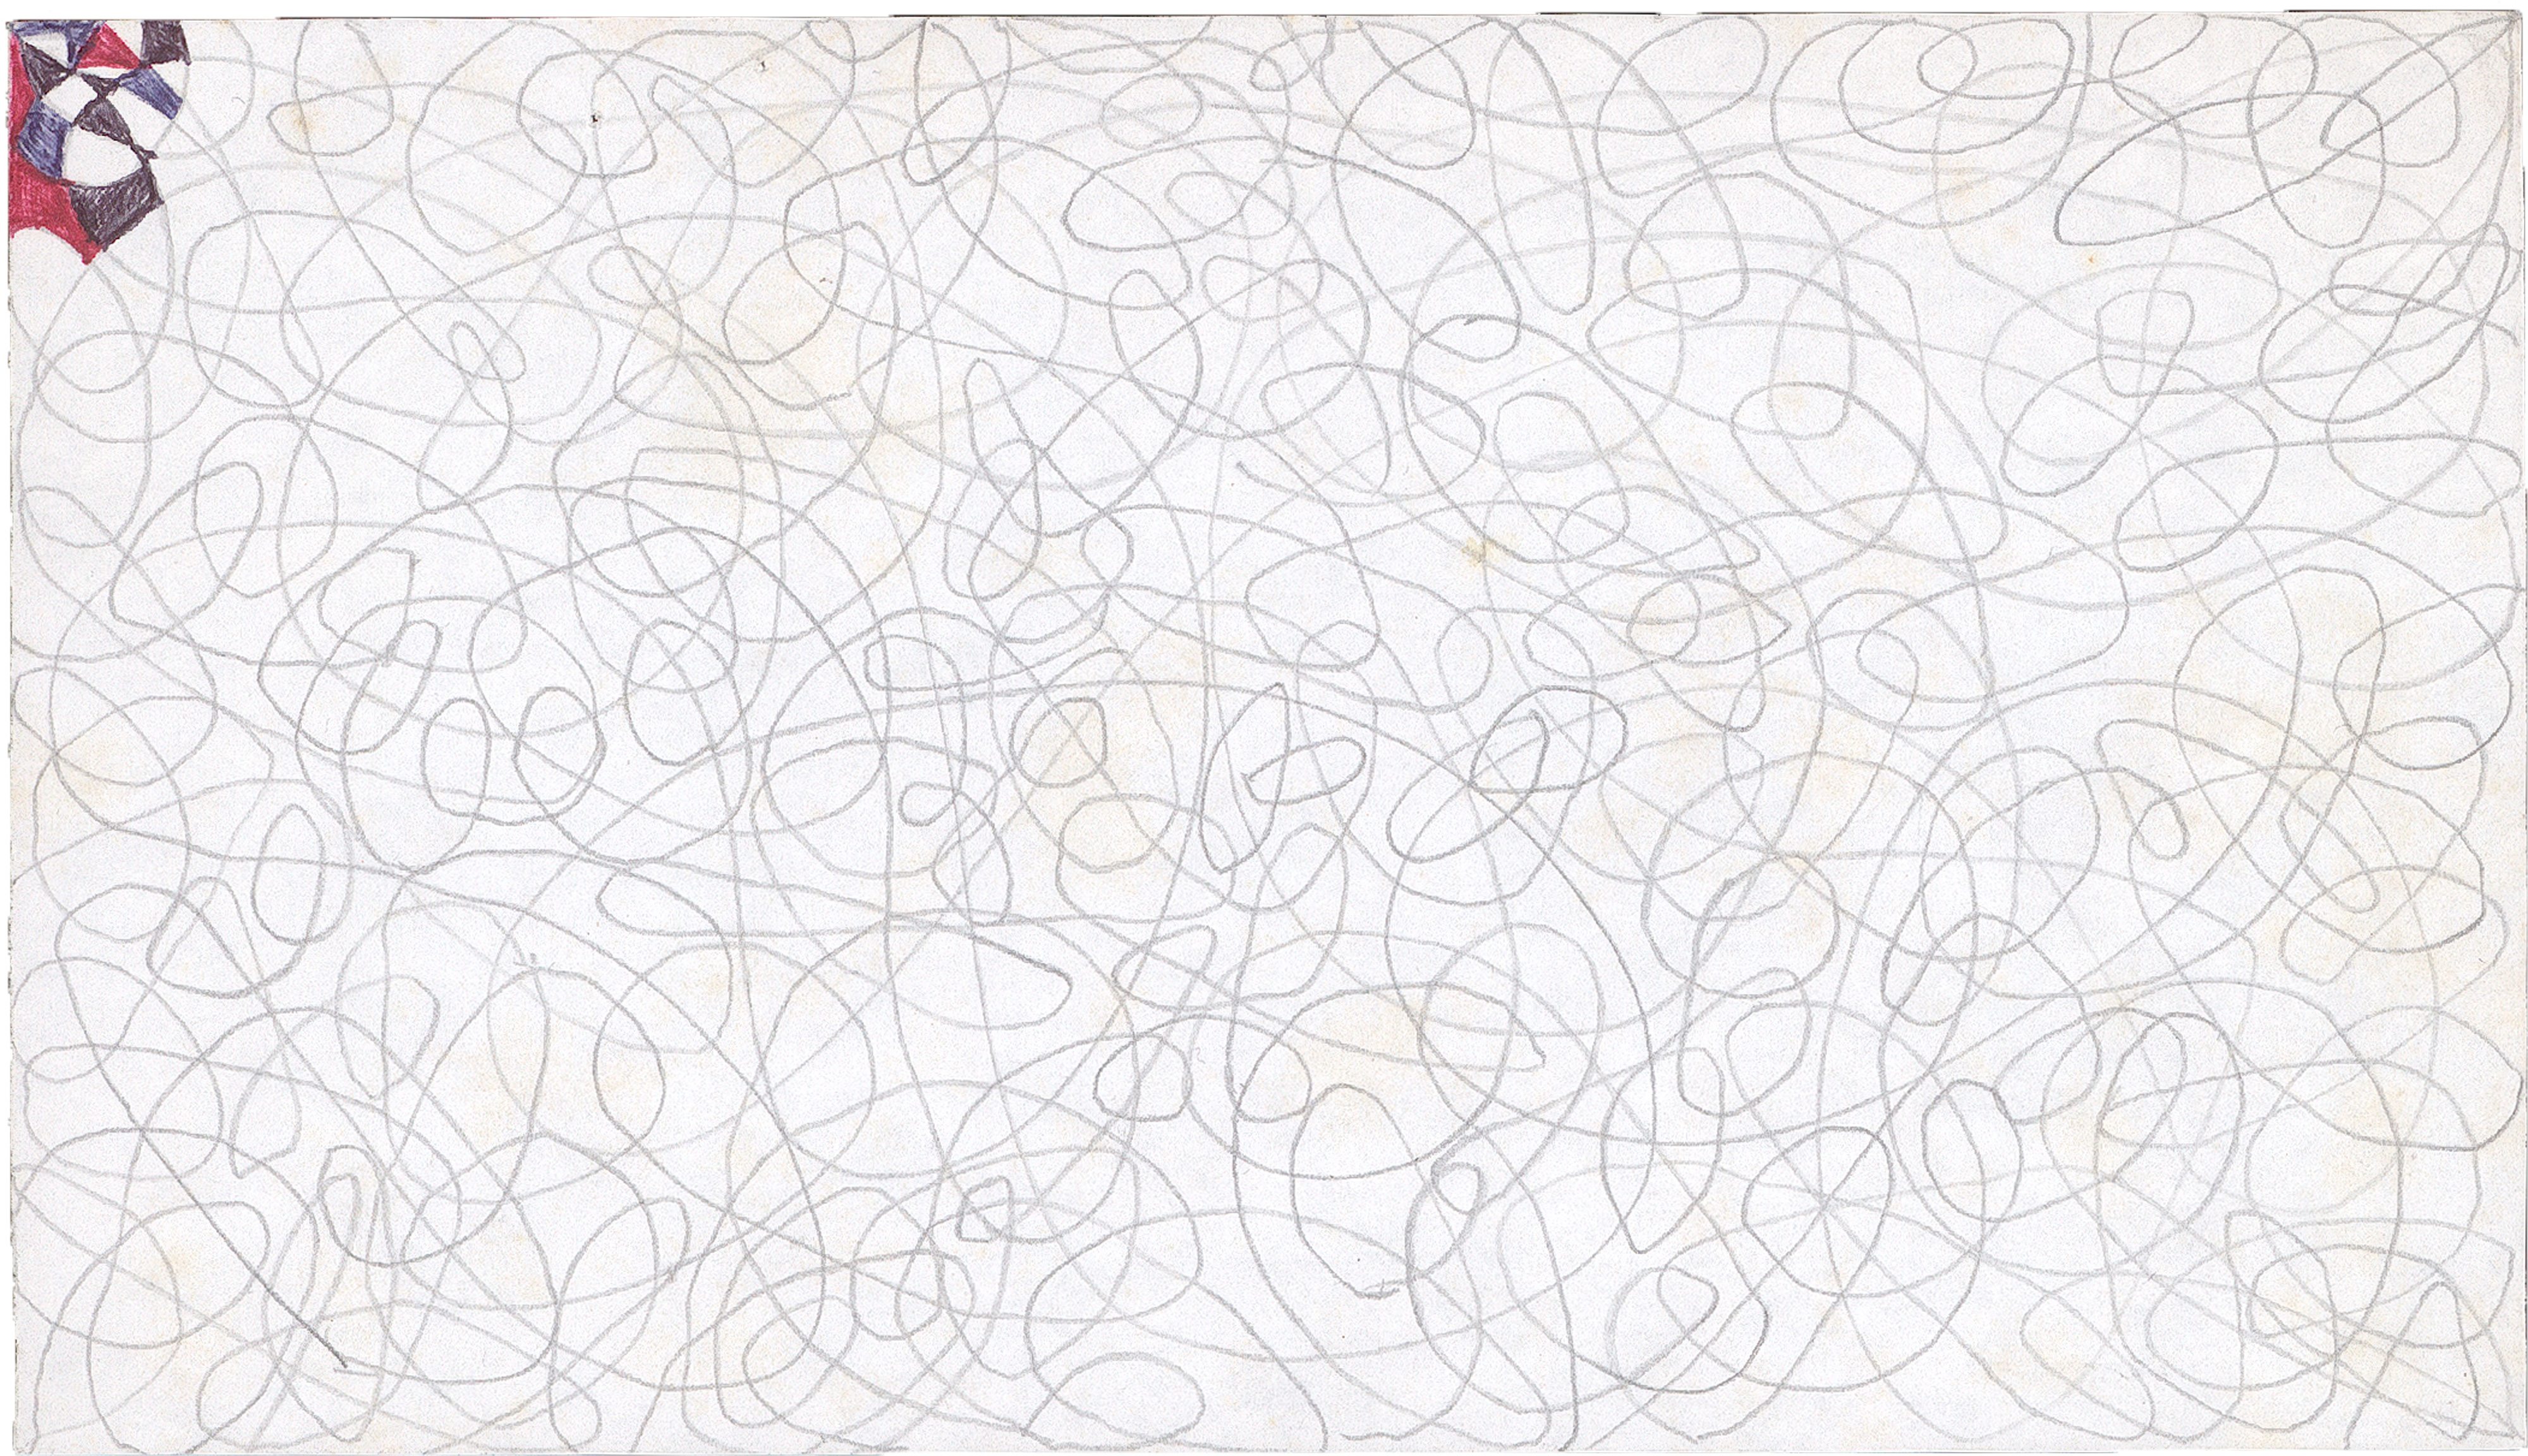 Galerie Barbara Thumm \ Teresa Burga – Insomnia Drawing (40) (TBu-ed-028) \ Insomnia Drawing (40) (2000)